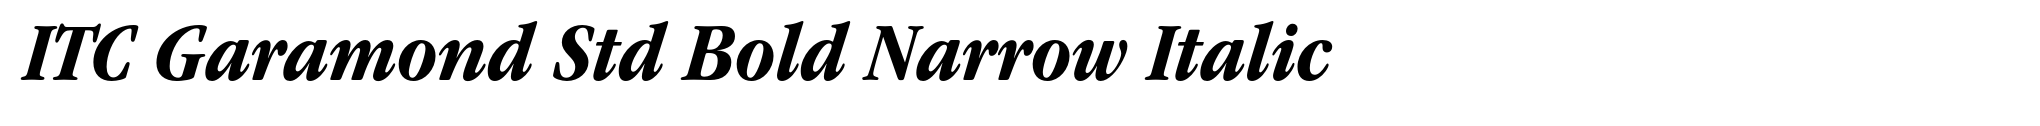 ITC Garamond Std Bold Narrow Italic image